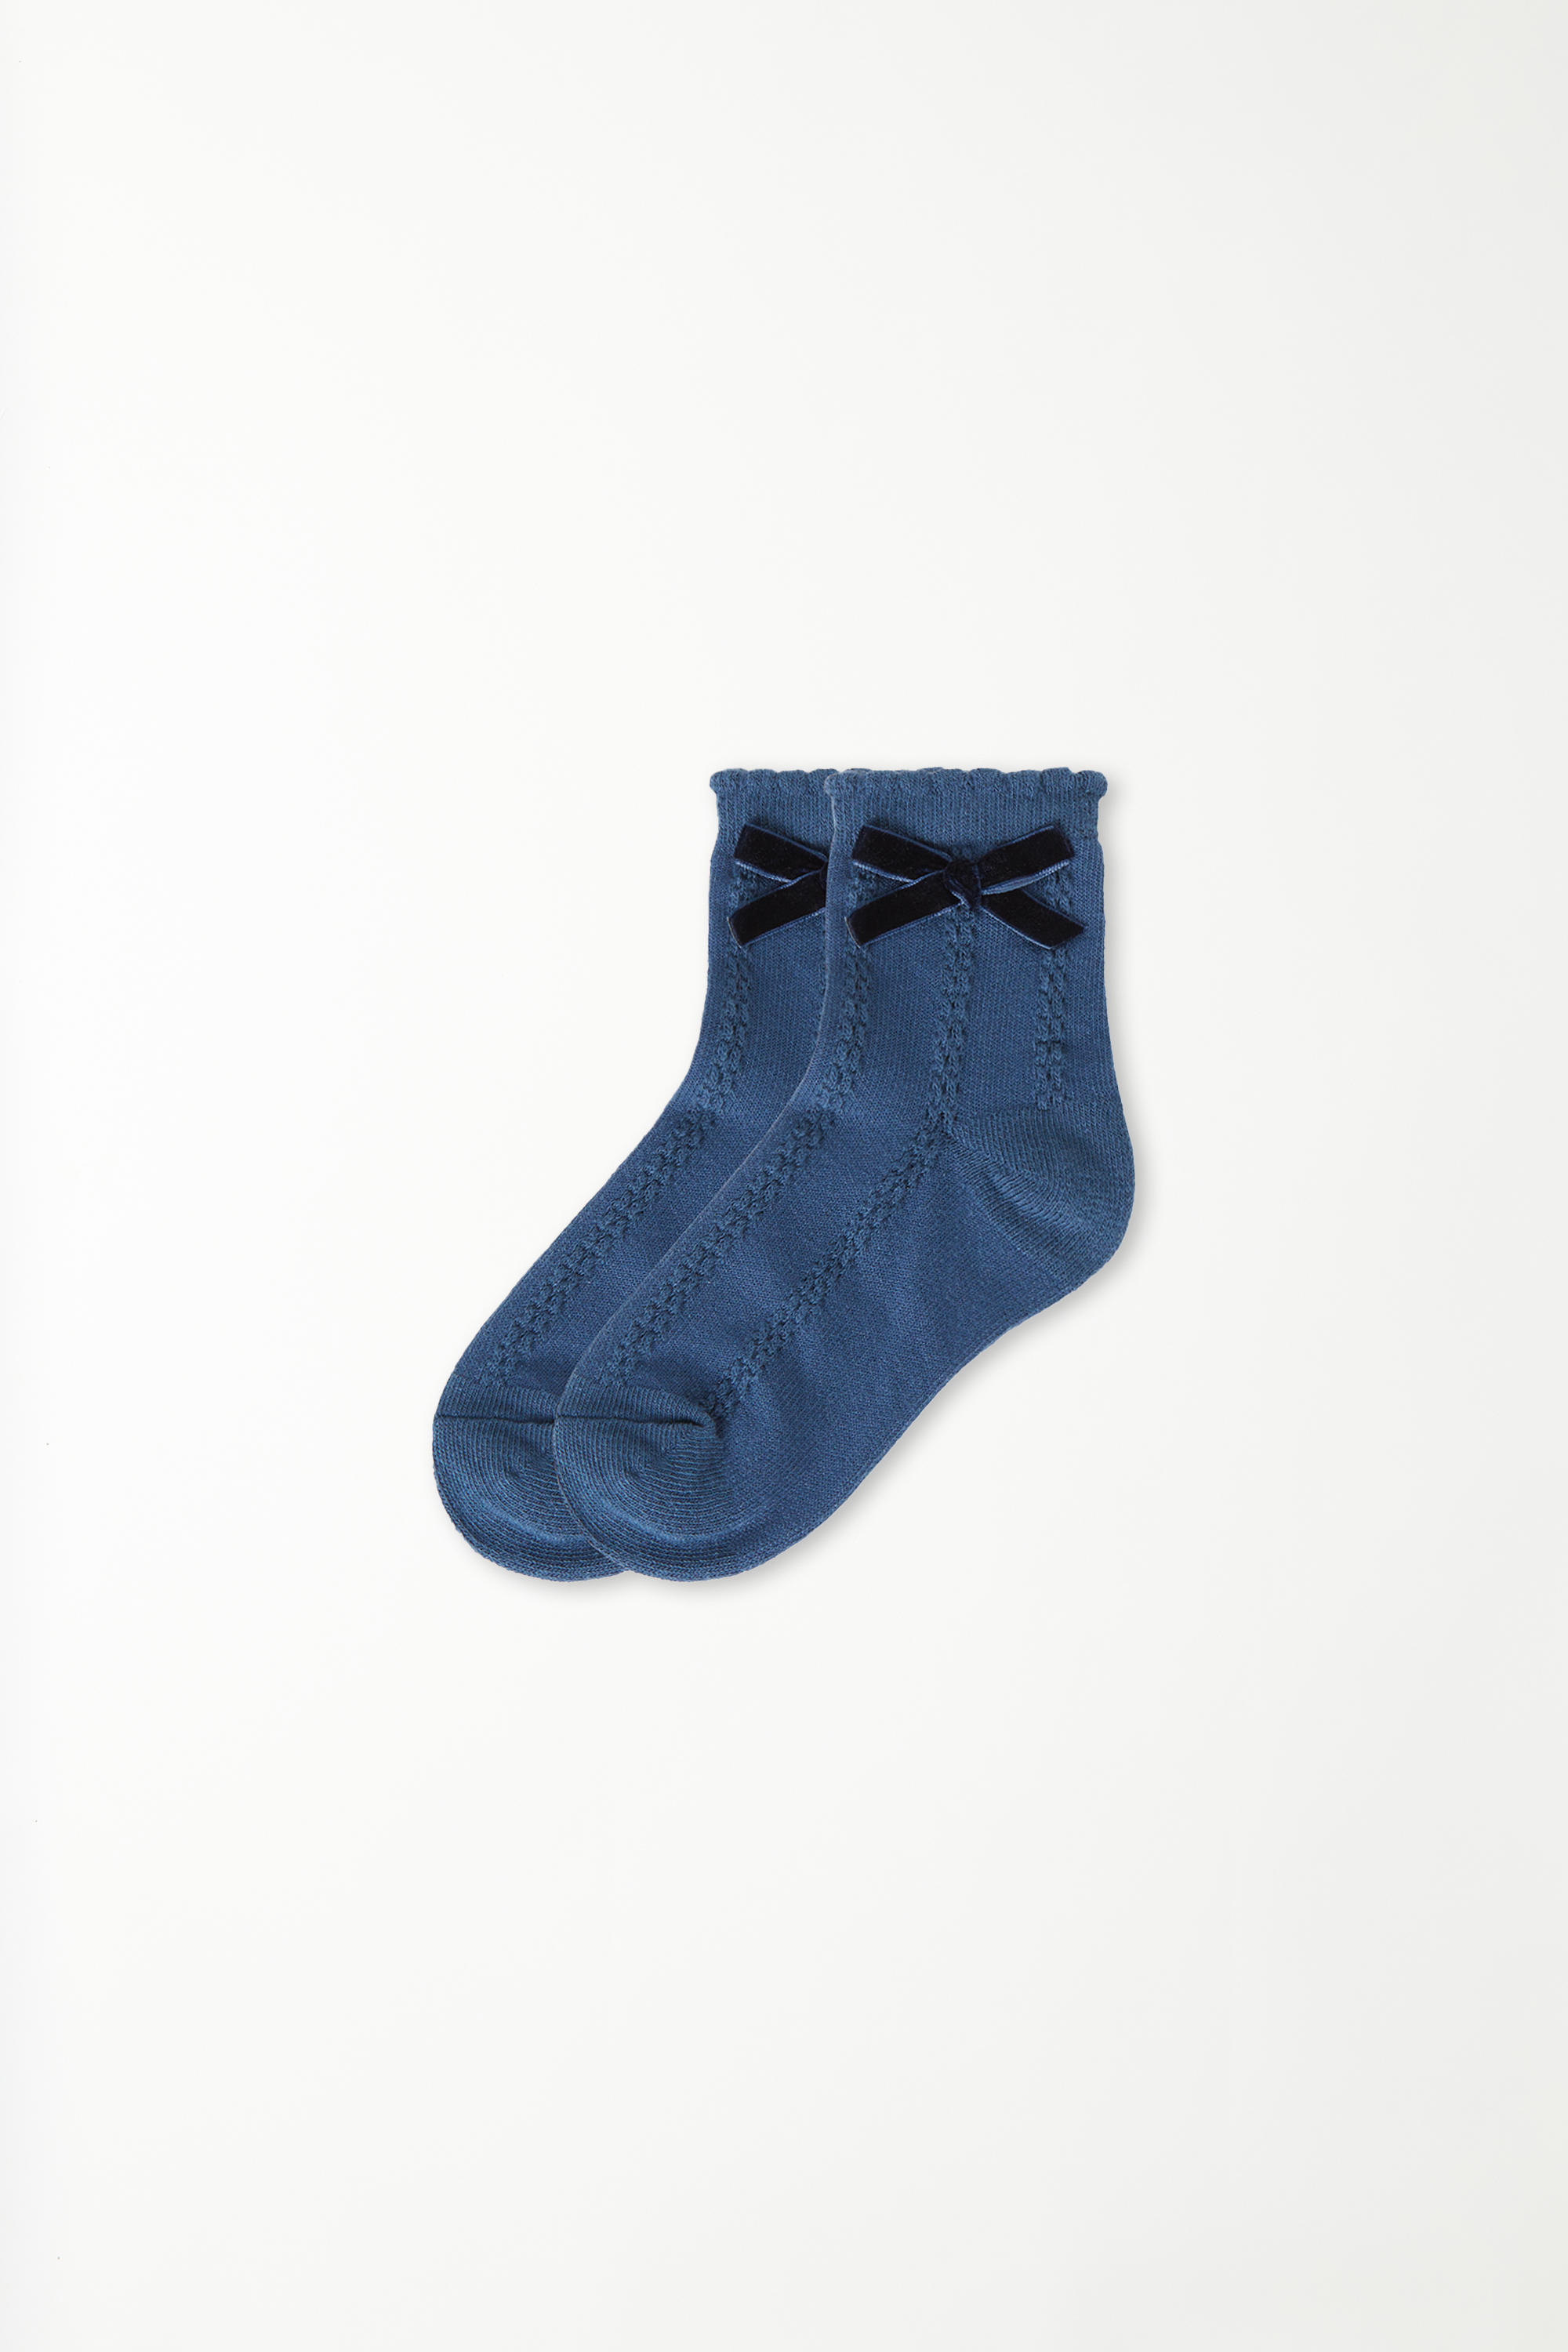 Girls’ Short Bow Openwork Cotton Socks